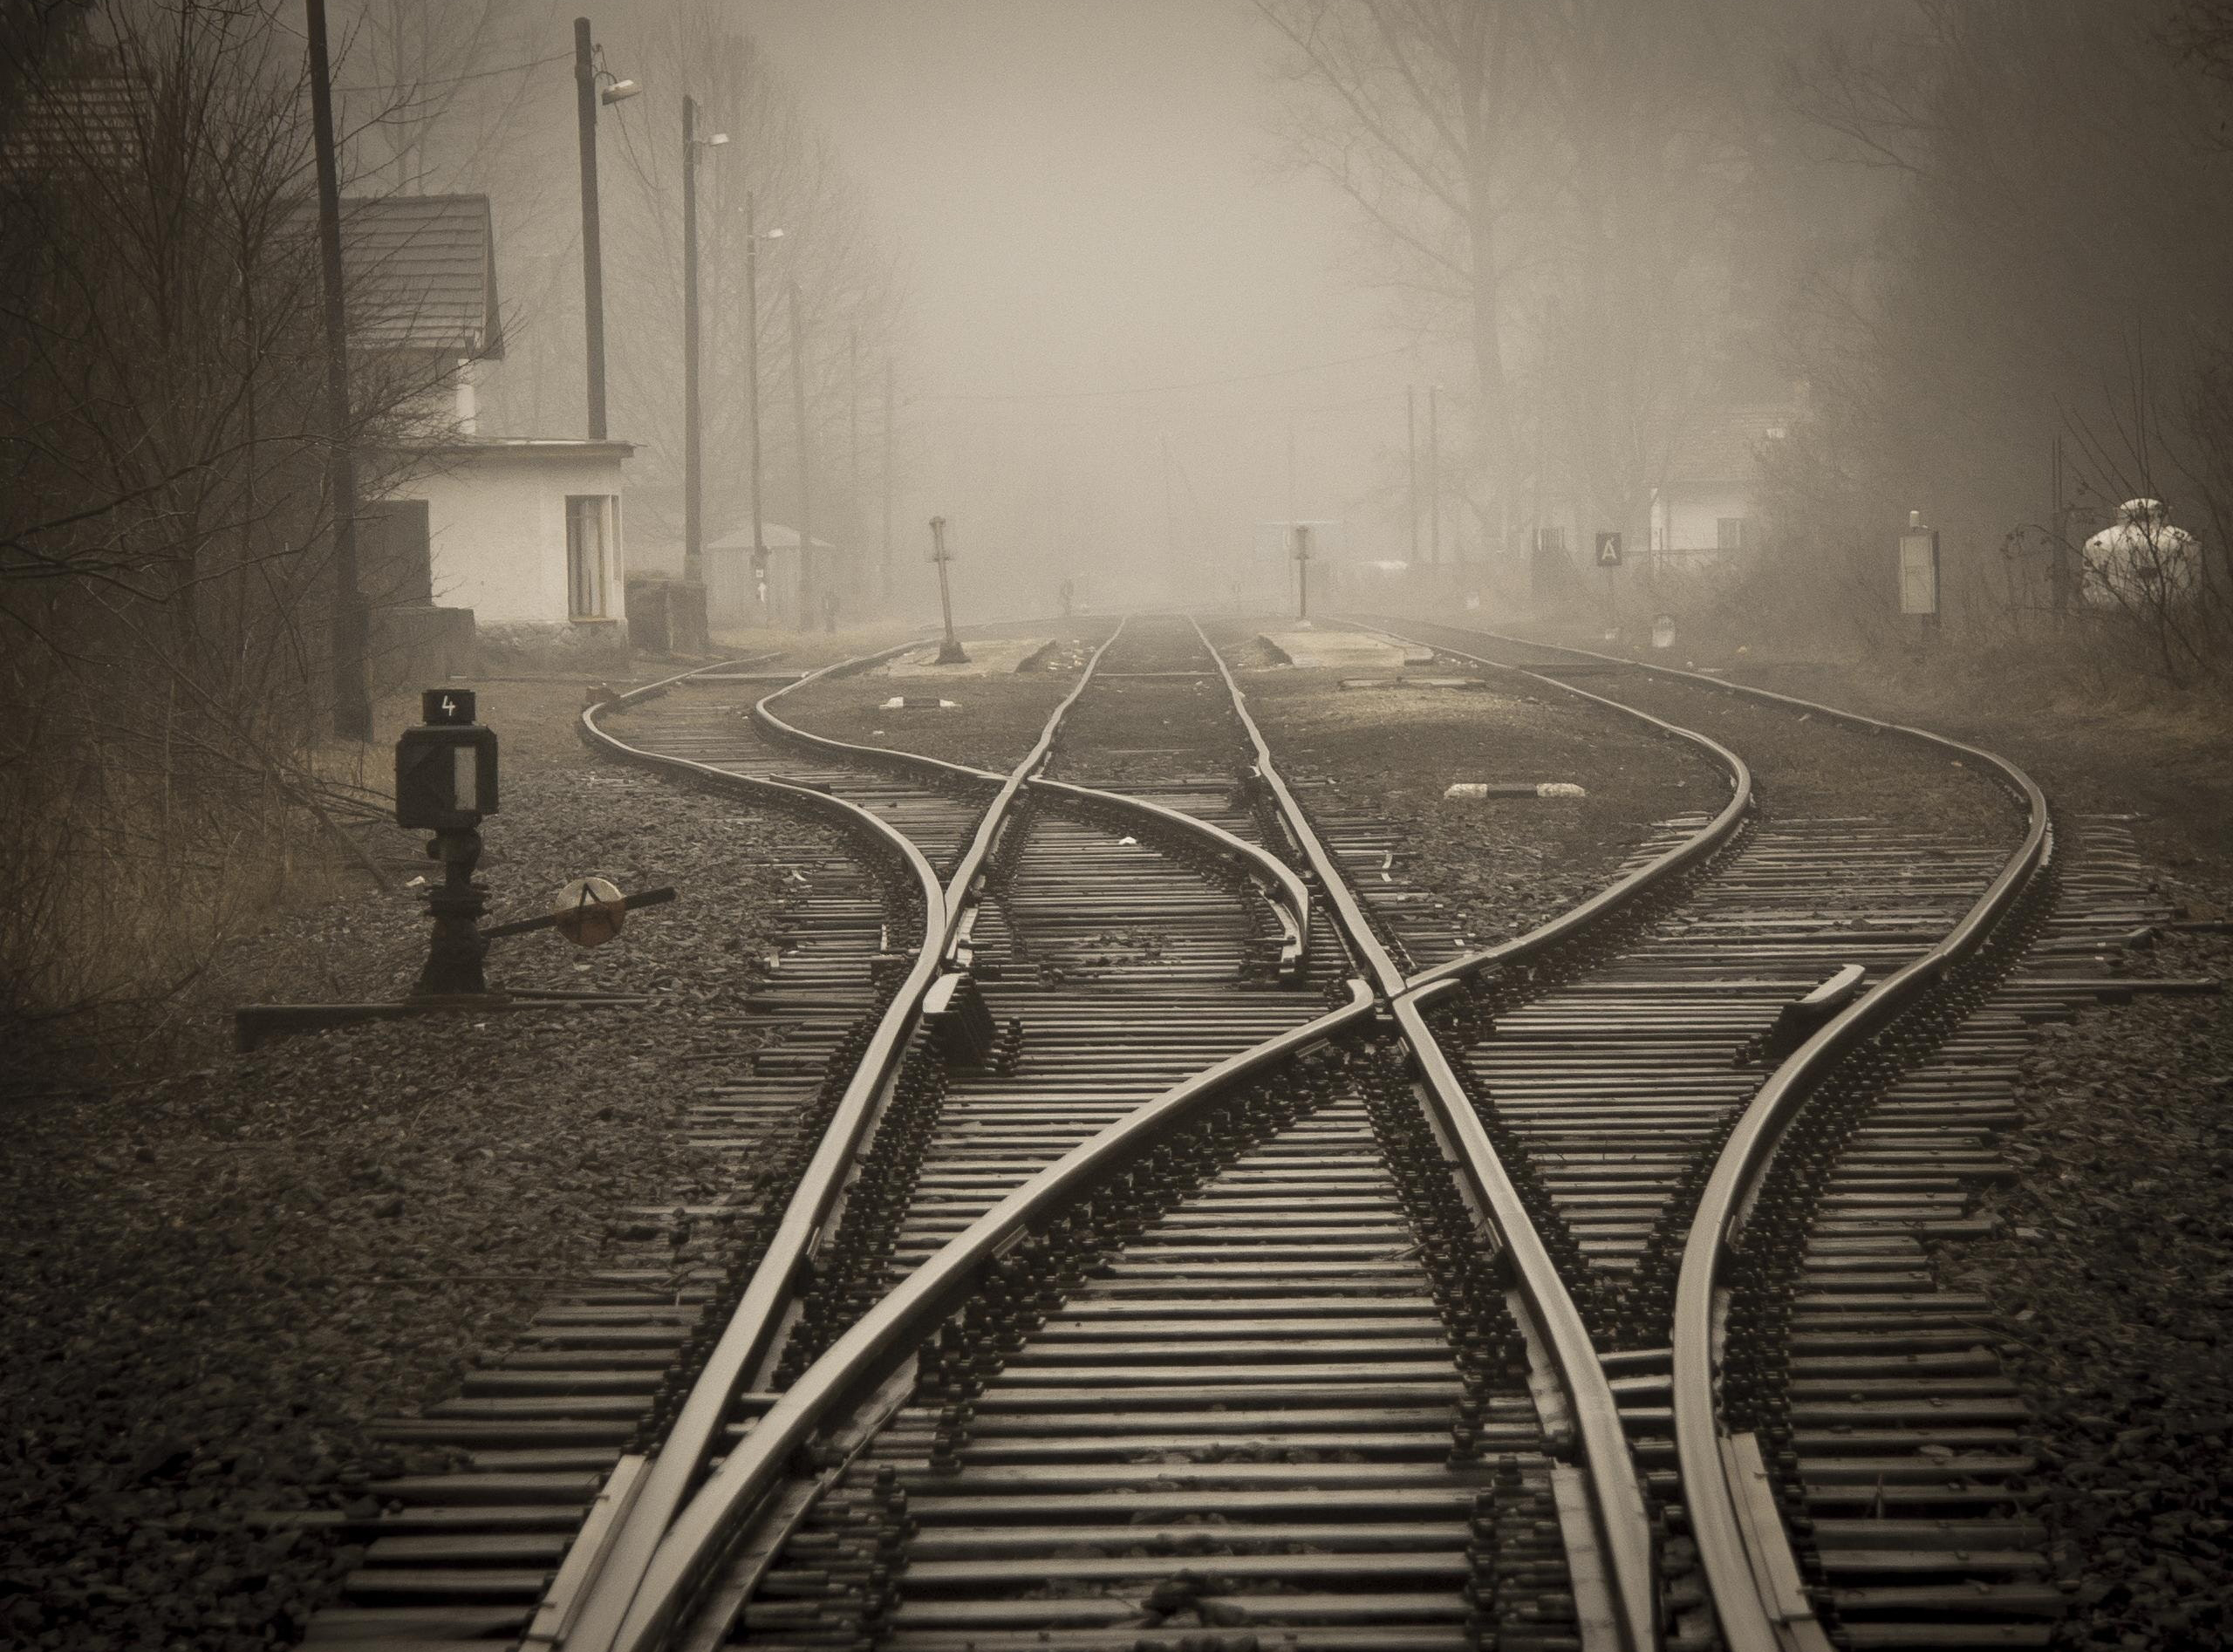 Train tracks heading into the misty distance